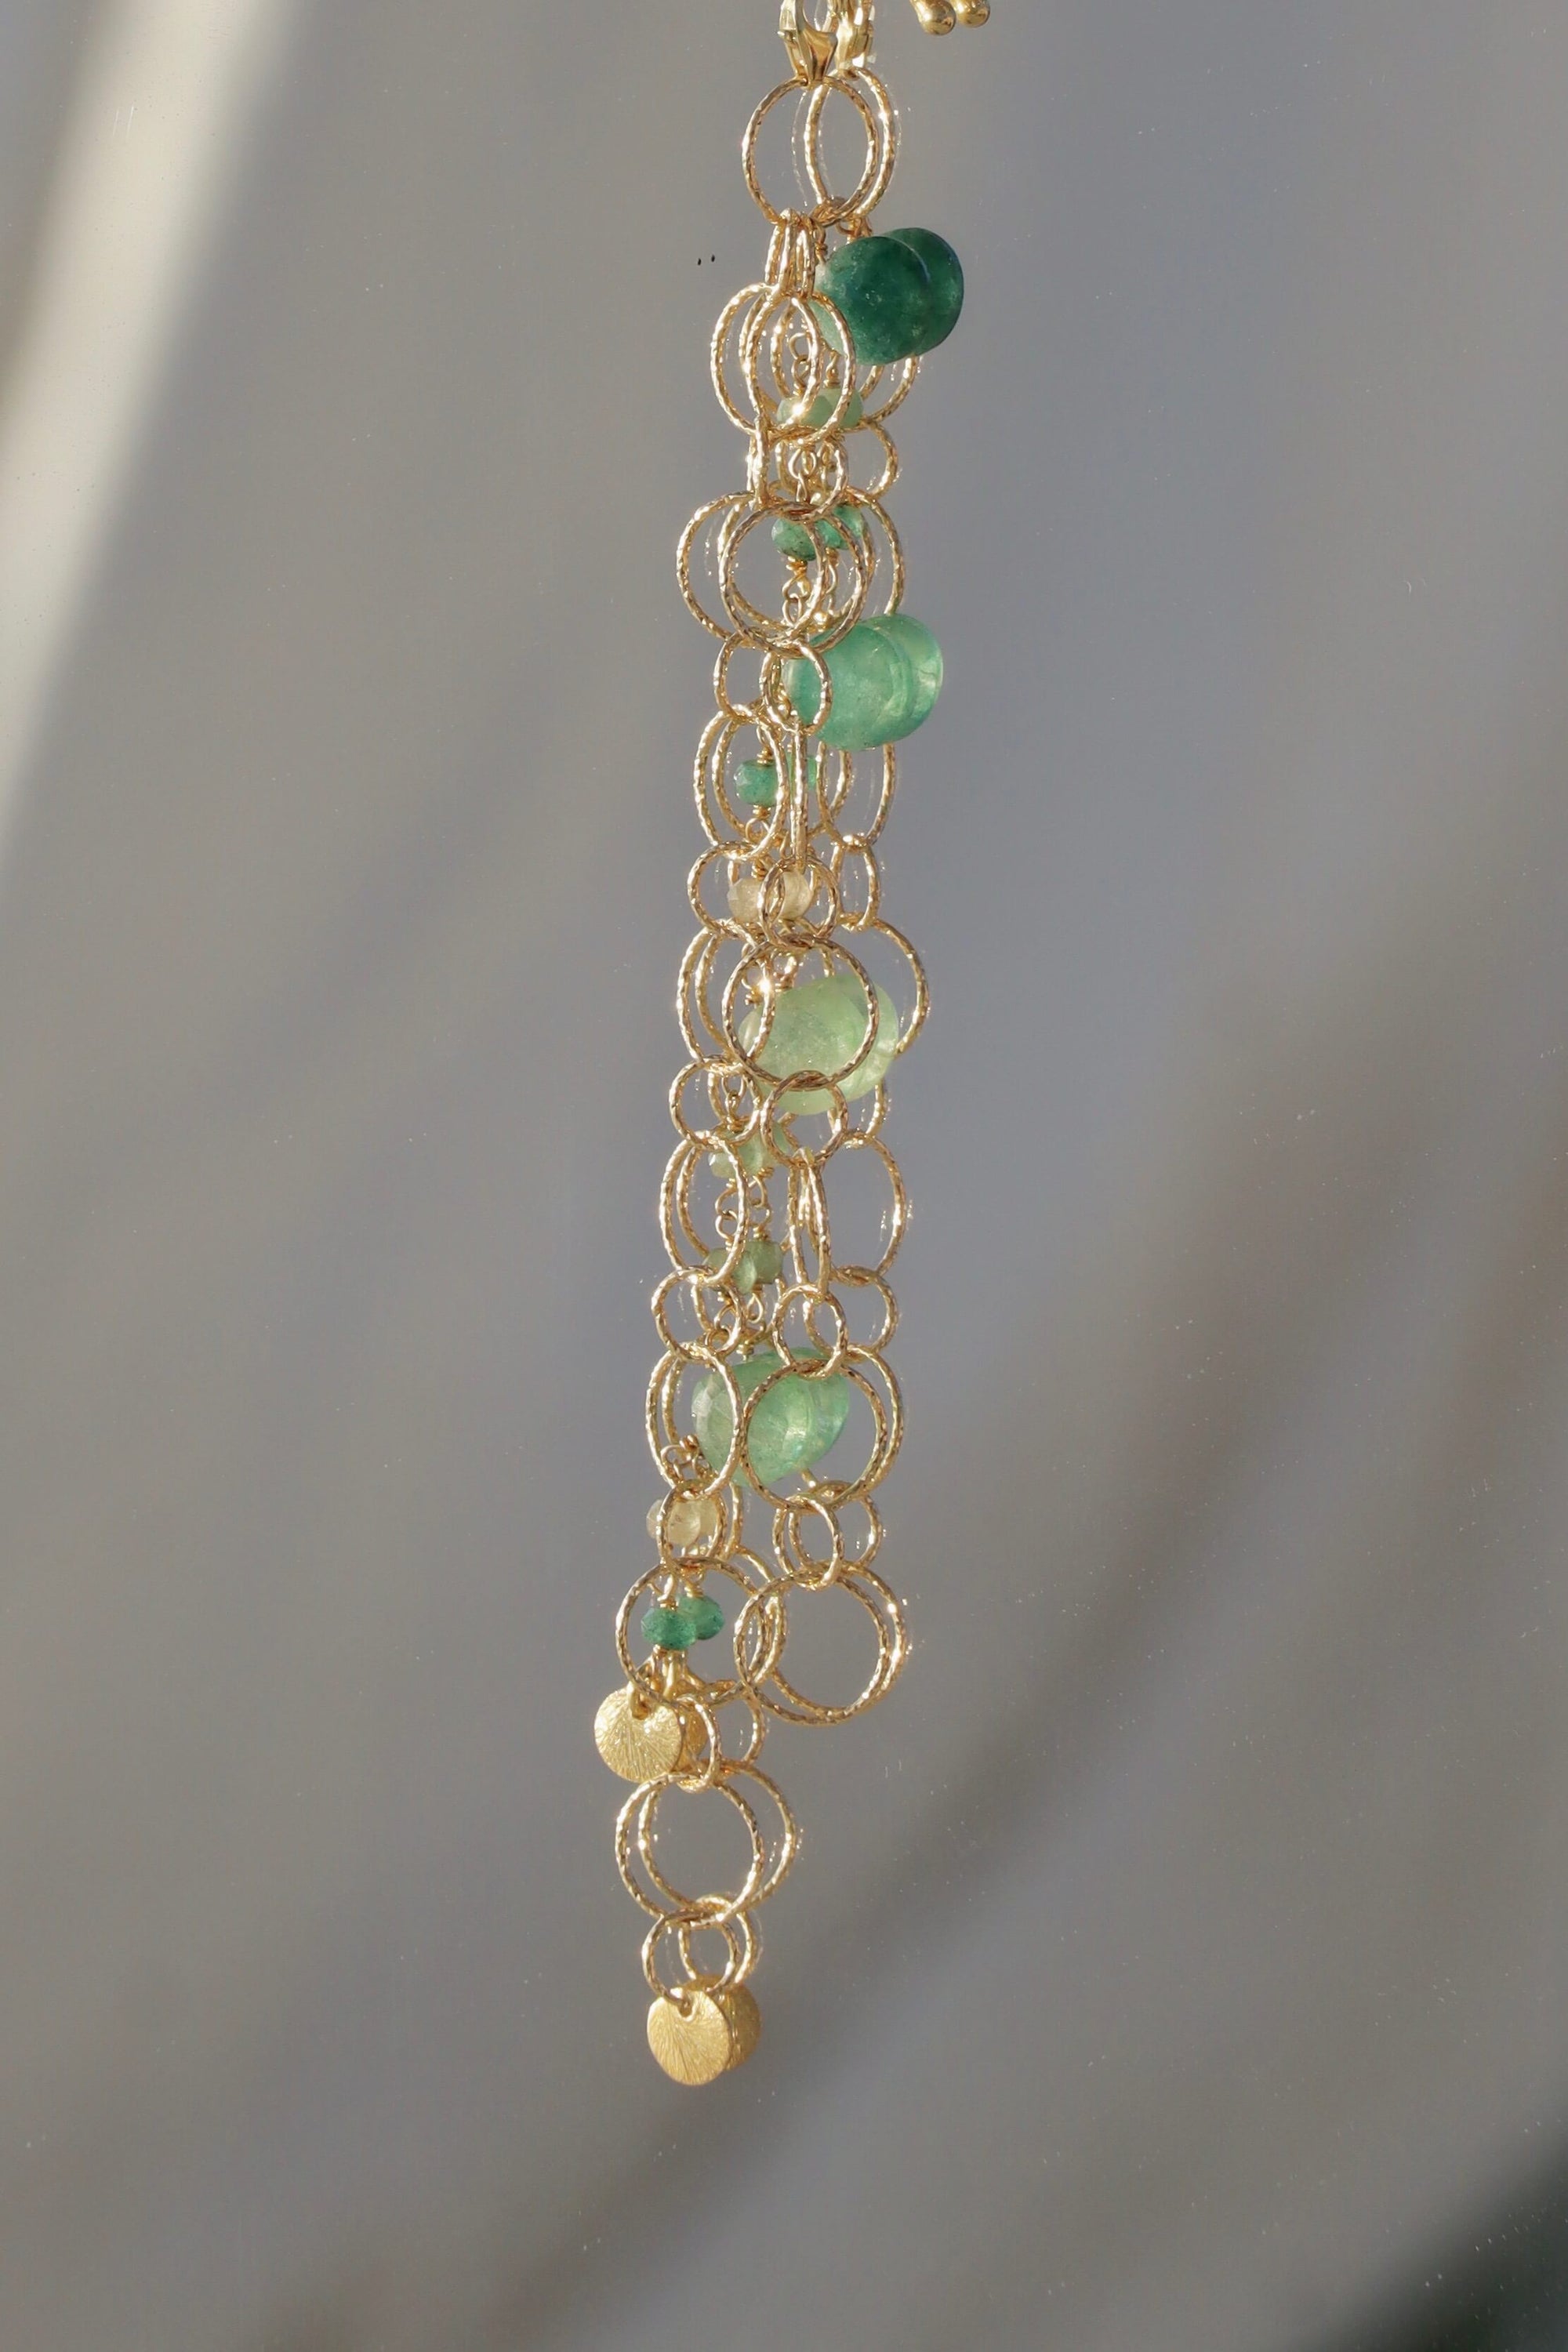 Earrings and pendant "AMUSE" Green agates,